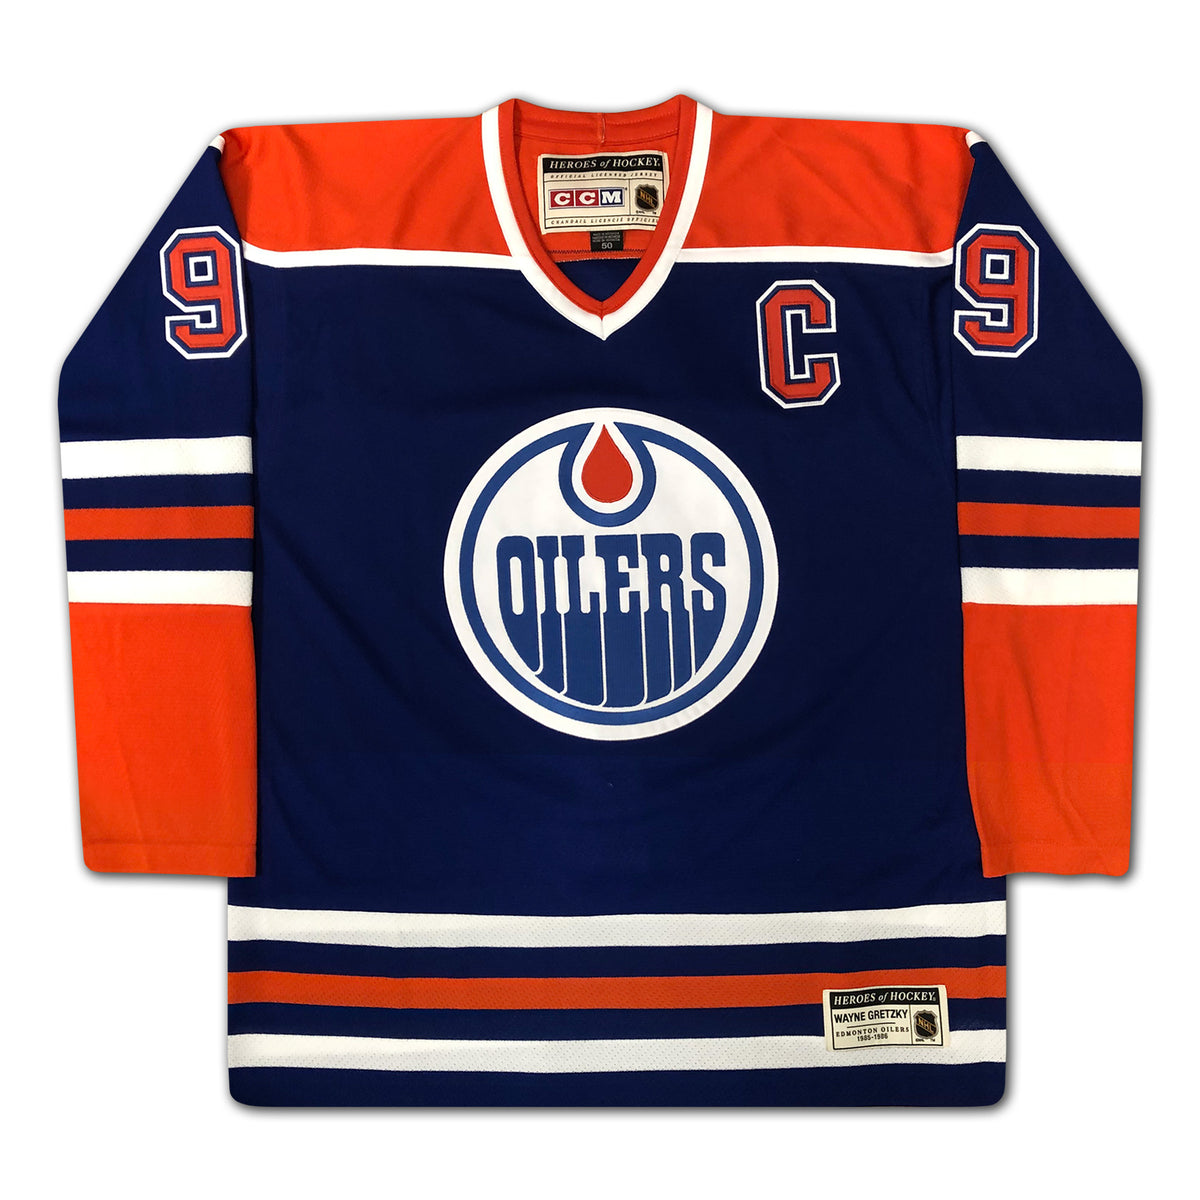 Wayne Gretzky Edmonton Oilers Upper Deck Autographed Blue Heroes of Hockey  CCM Jersey